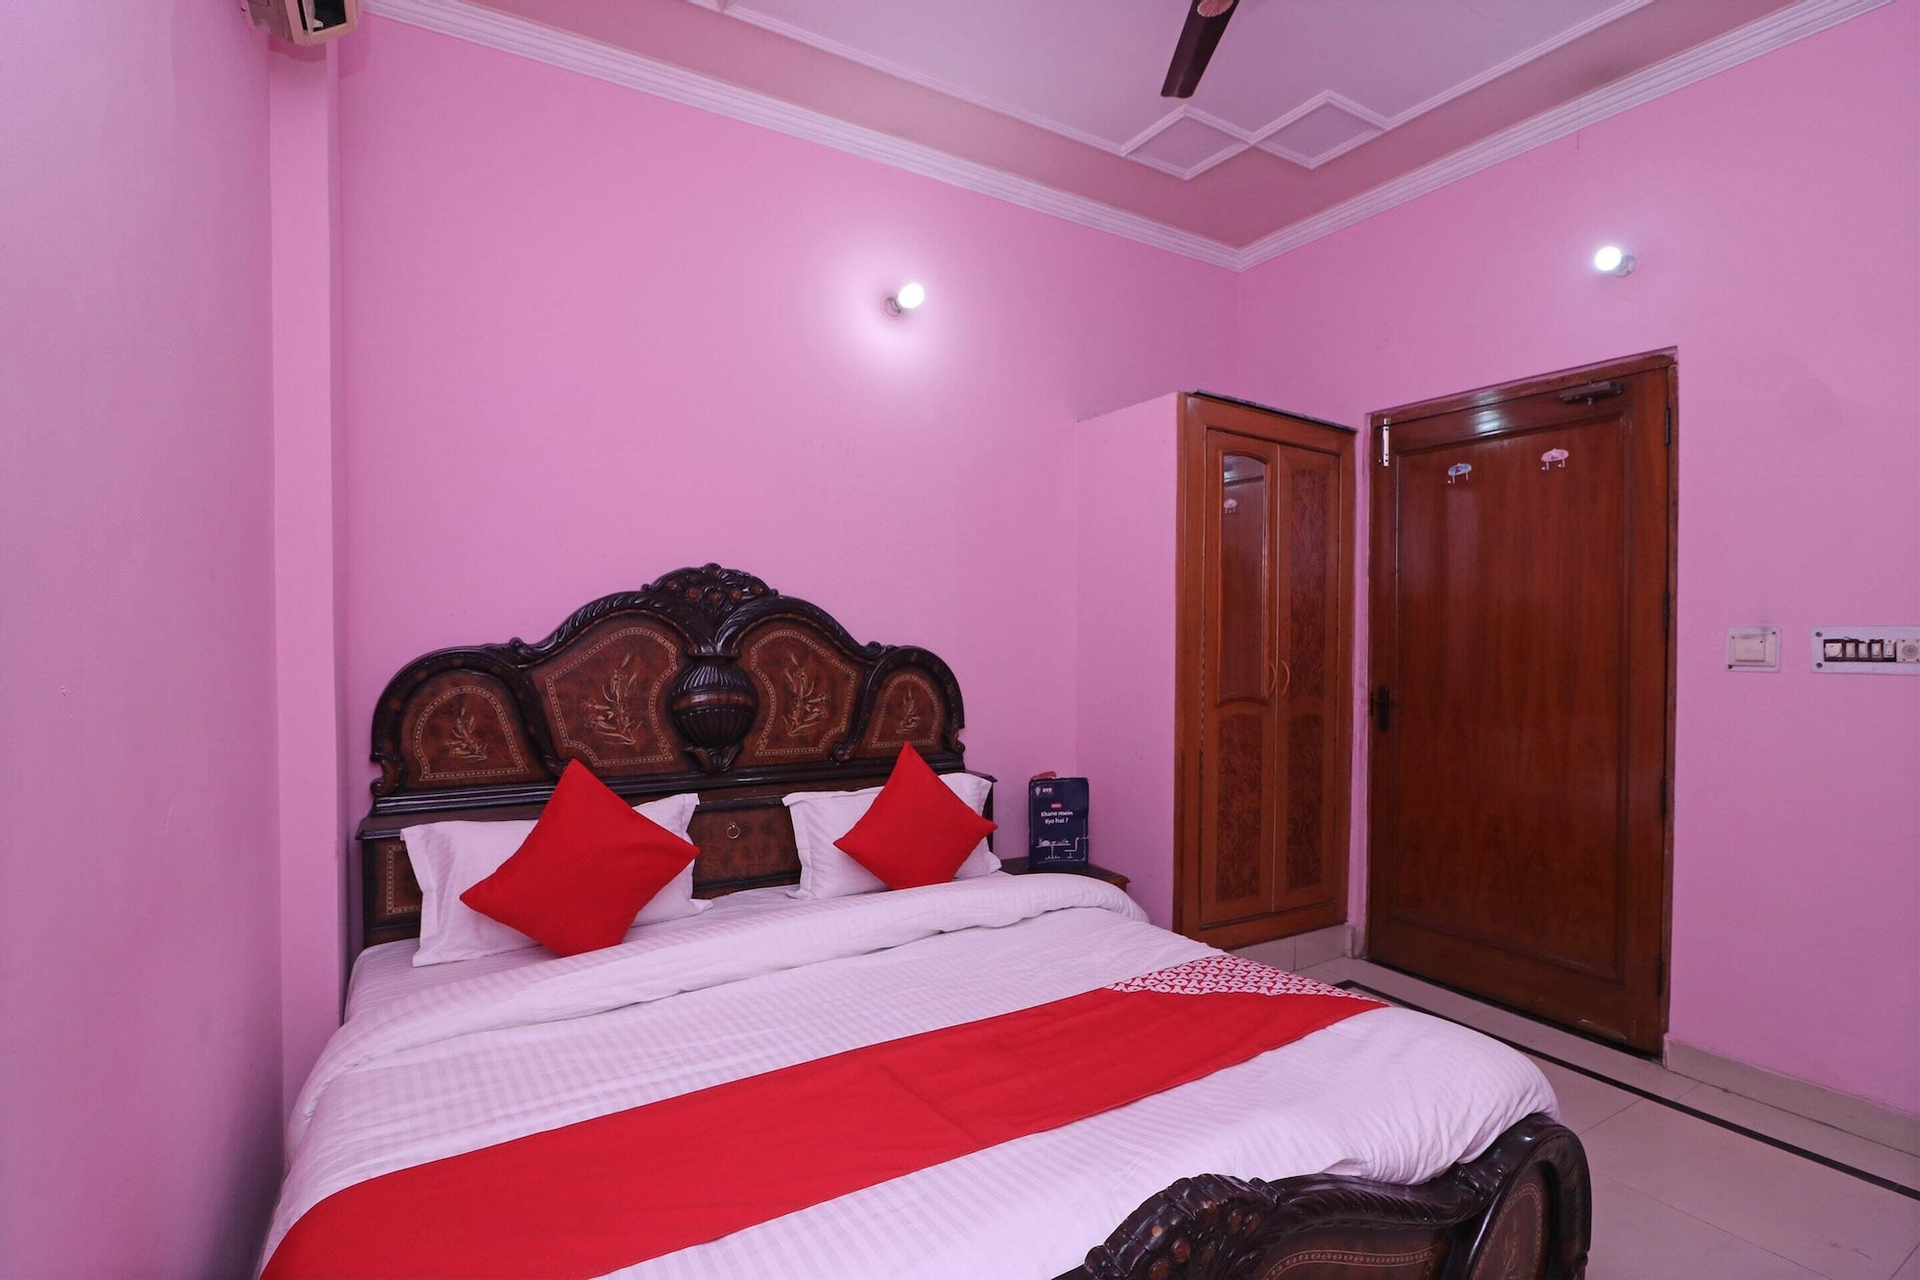 Bedroom 1, OYO 26906 Hotel Tarang, Faridabad